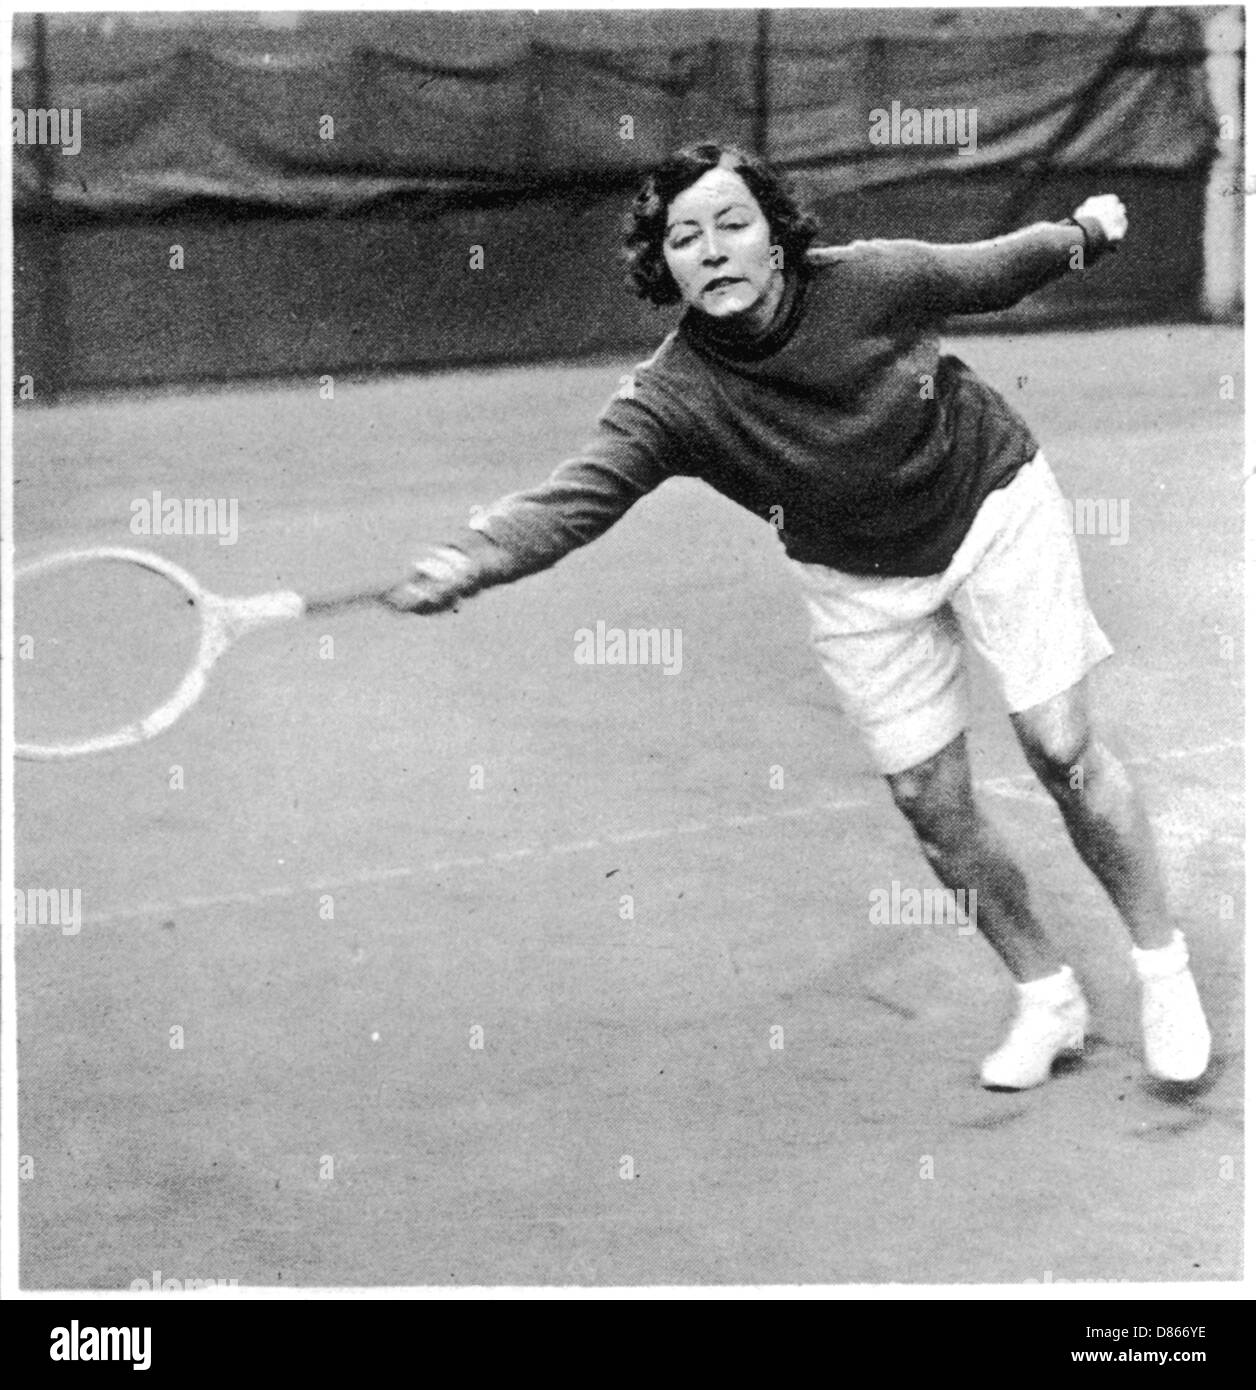 Tennis fashion Black and White Stock Photos & Images - Alamy